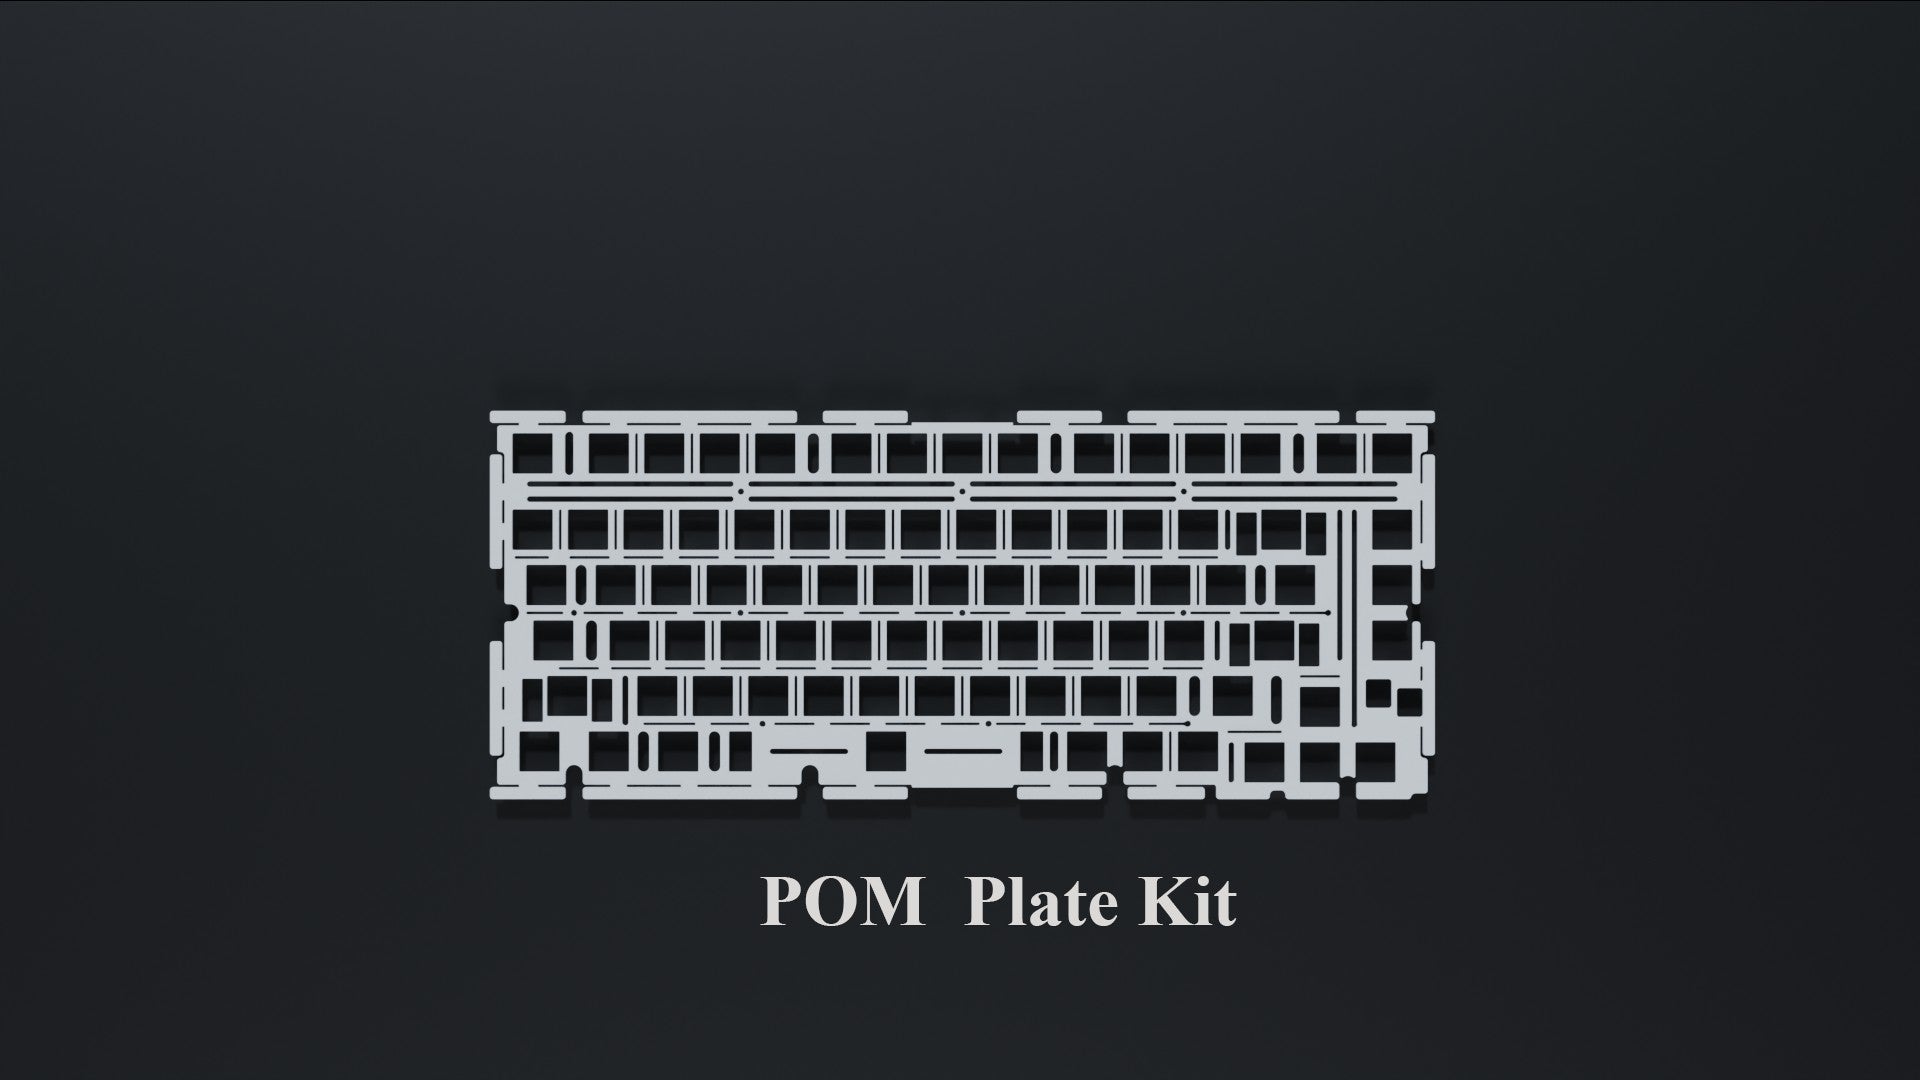 Hope 75X Mechanical Keyboard - Addons & Accessories